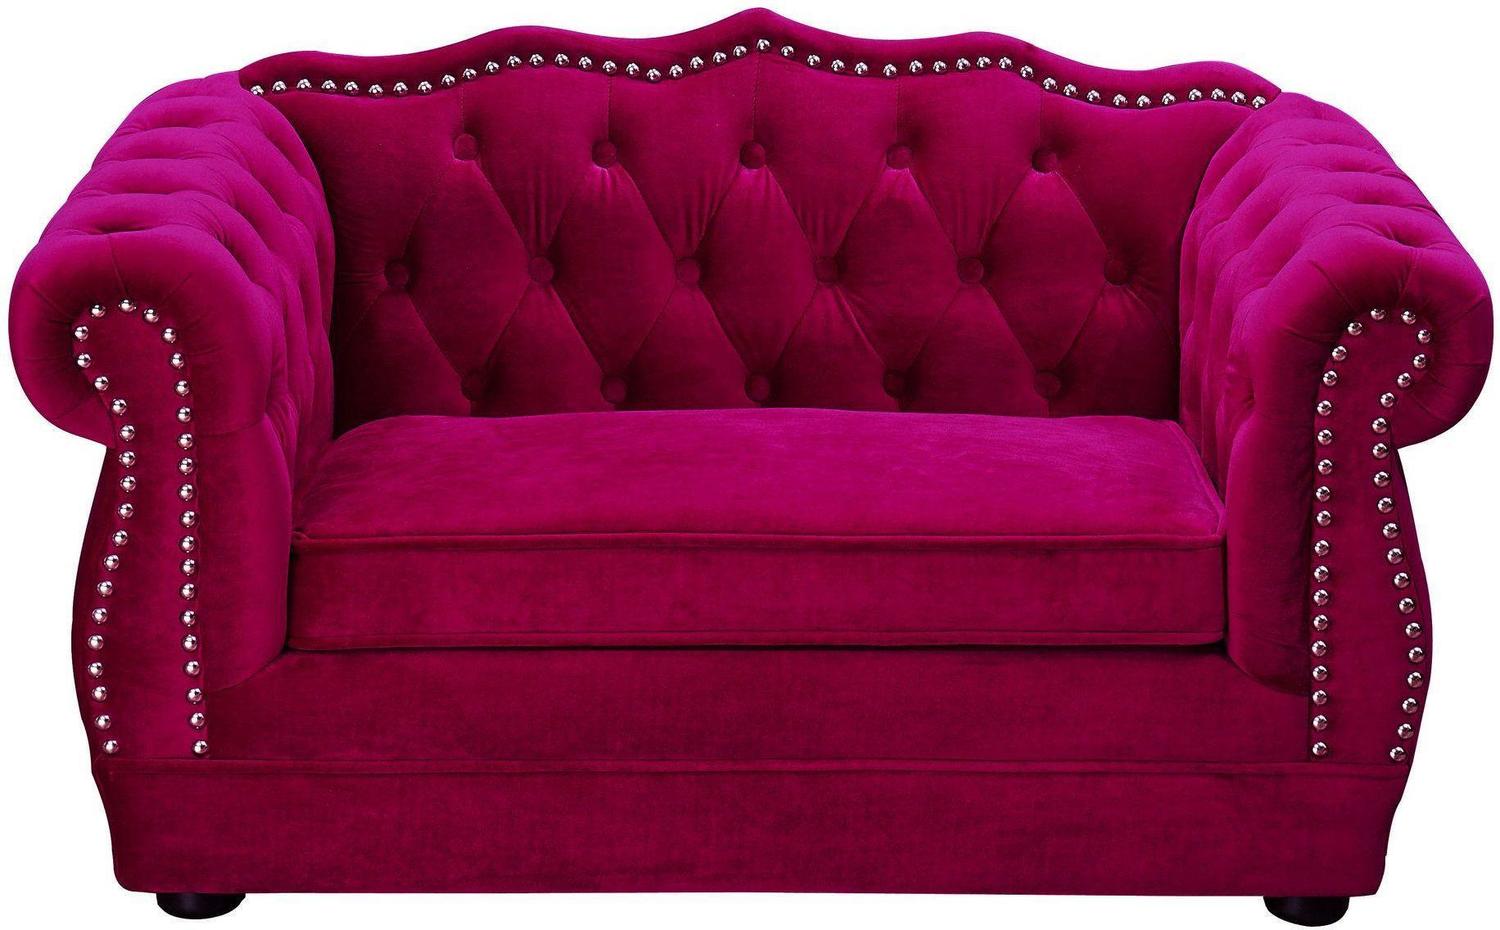 sofa dog beds for large dogs Tov Furniture Pink